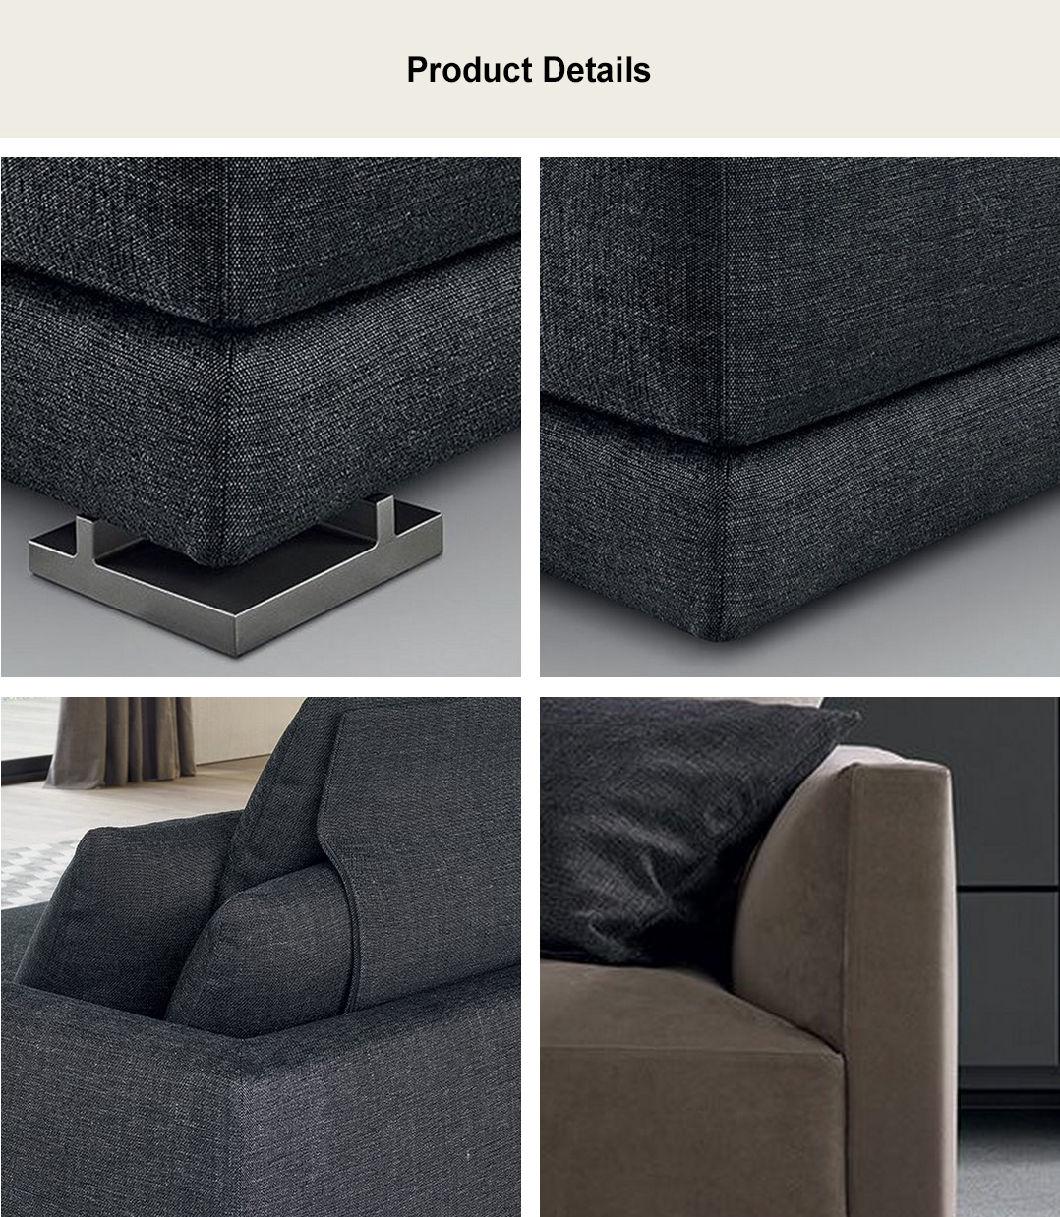 High Quality New Modern Fabric Living Room Furniture Sofa